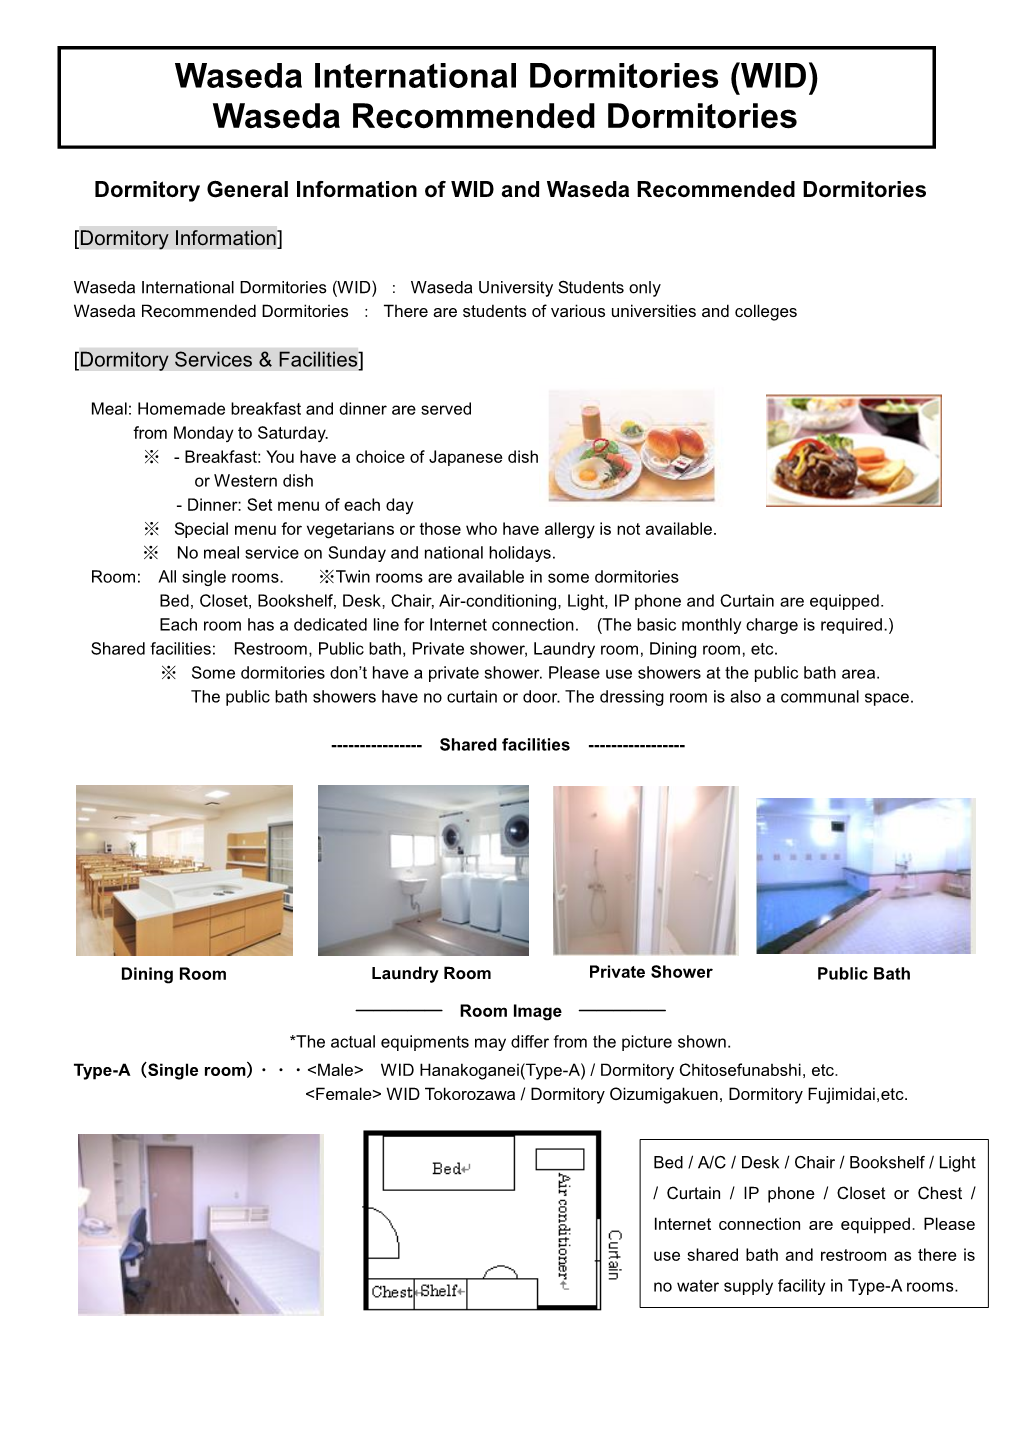 Waseda International Dormitories (WID) Waseda Recommended Dormitories